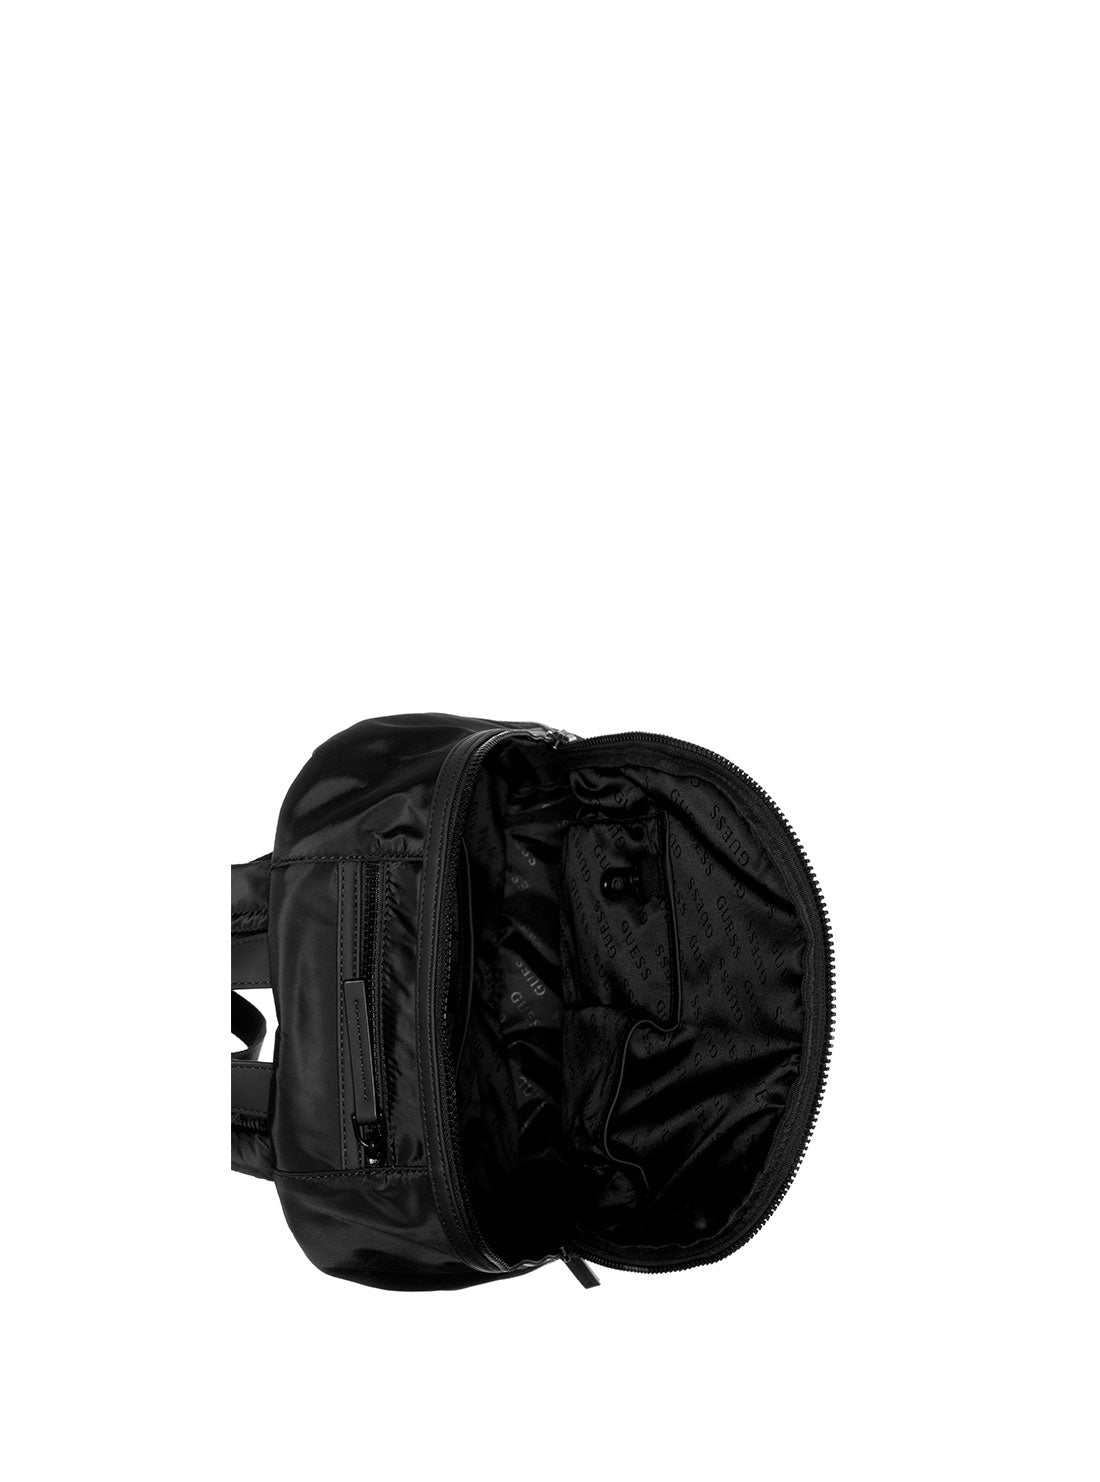 GUESS Men's Black Originals Backpack TS703198 Inside View